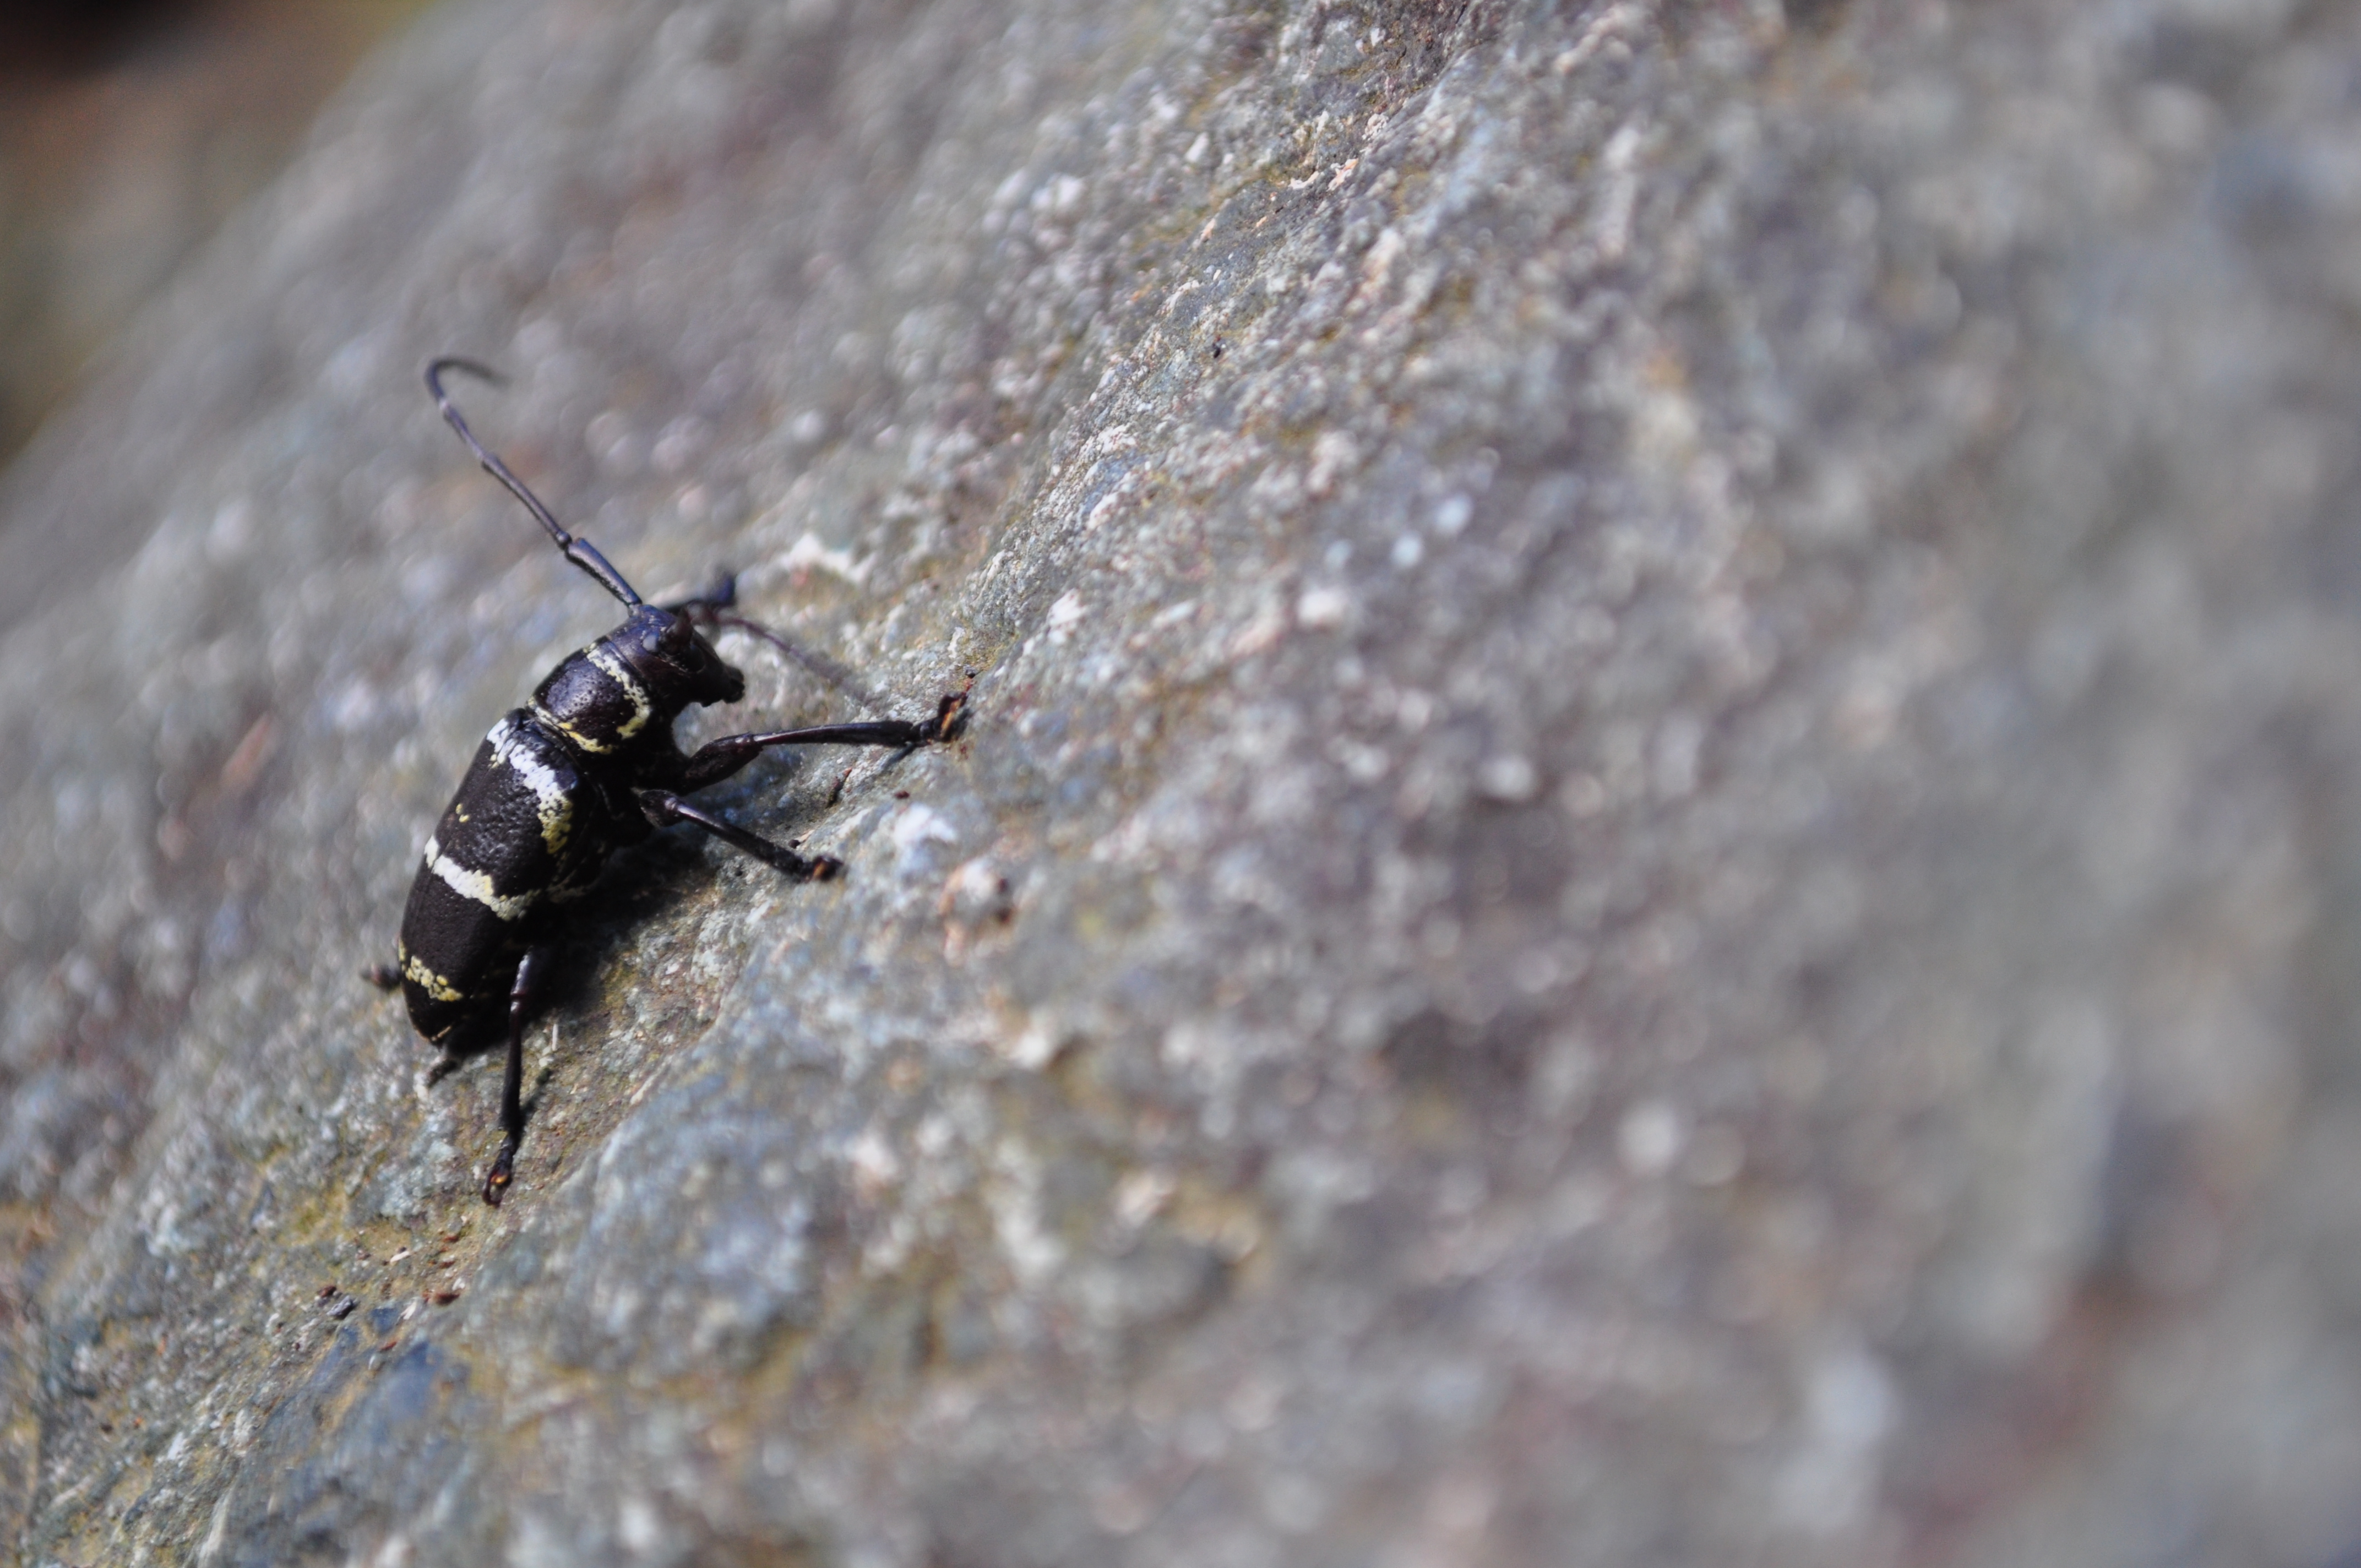 Beetle on a rock photo